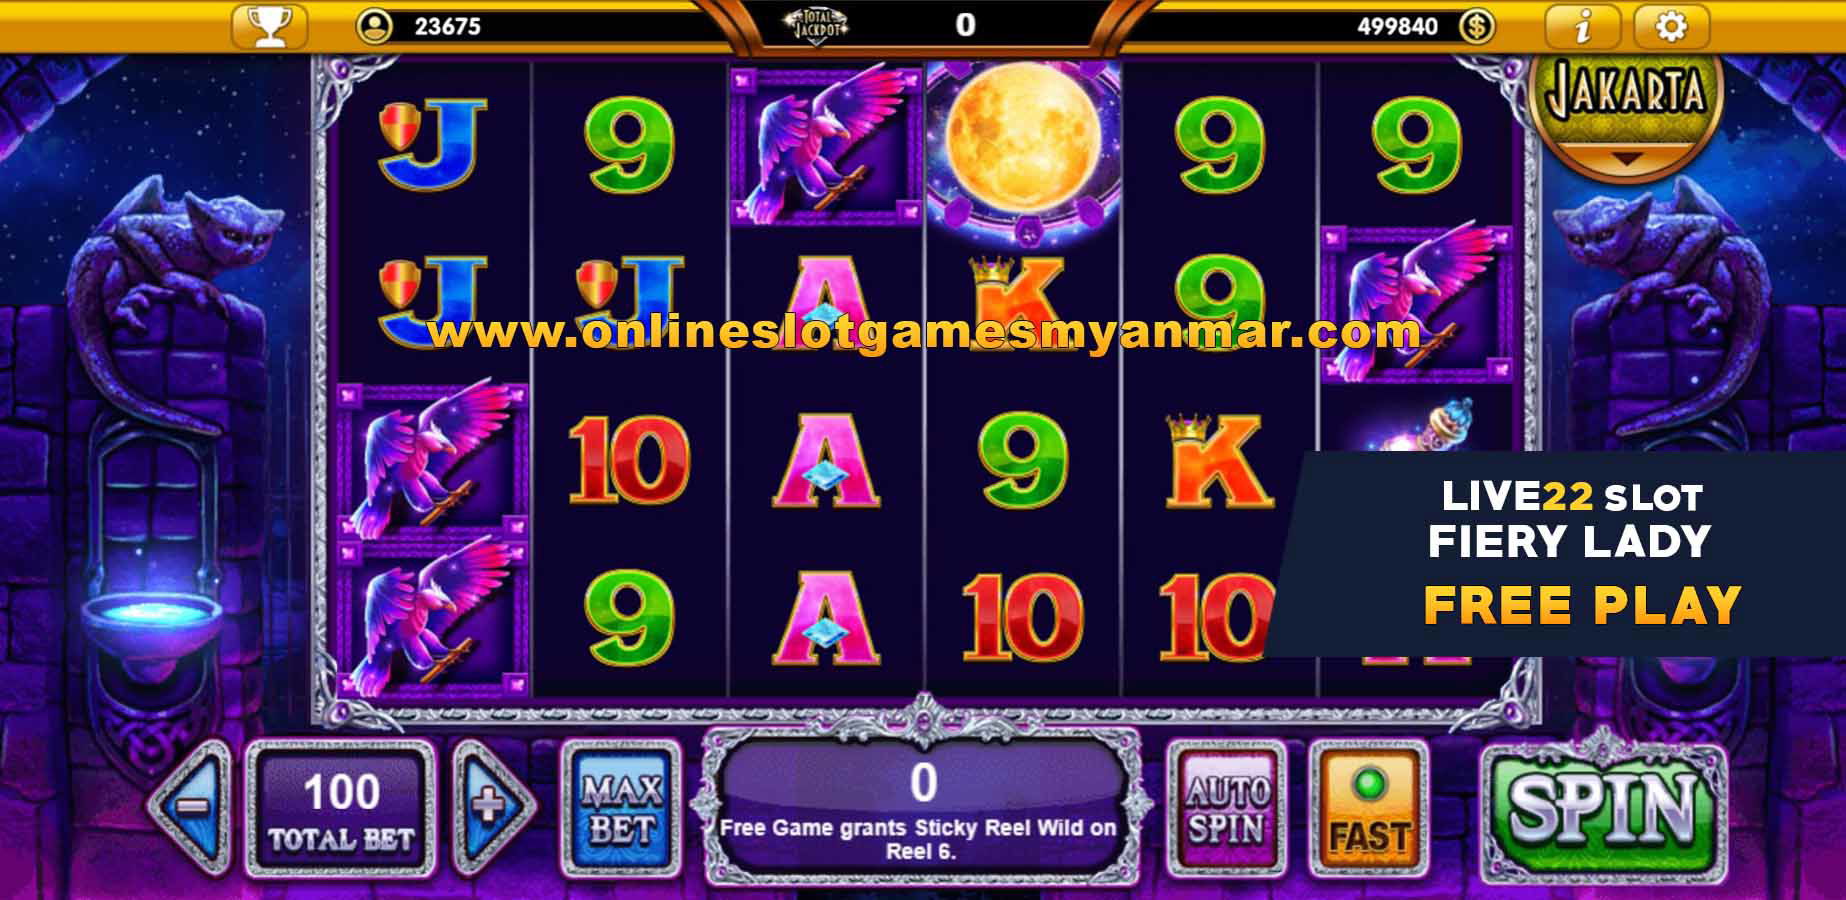 Free Play 6 Fiery Lady Slot Game - Live22 Myanmar (1)